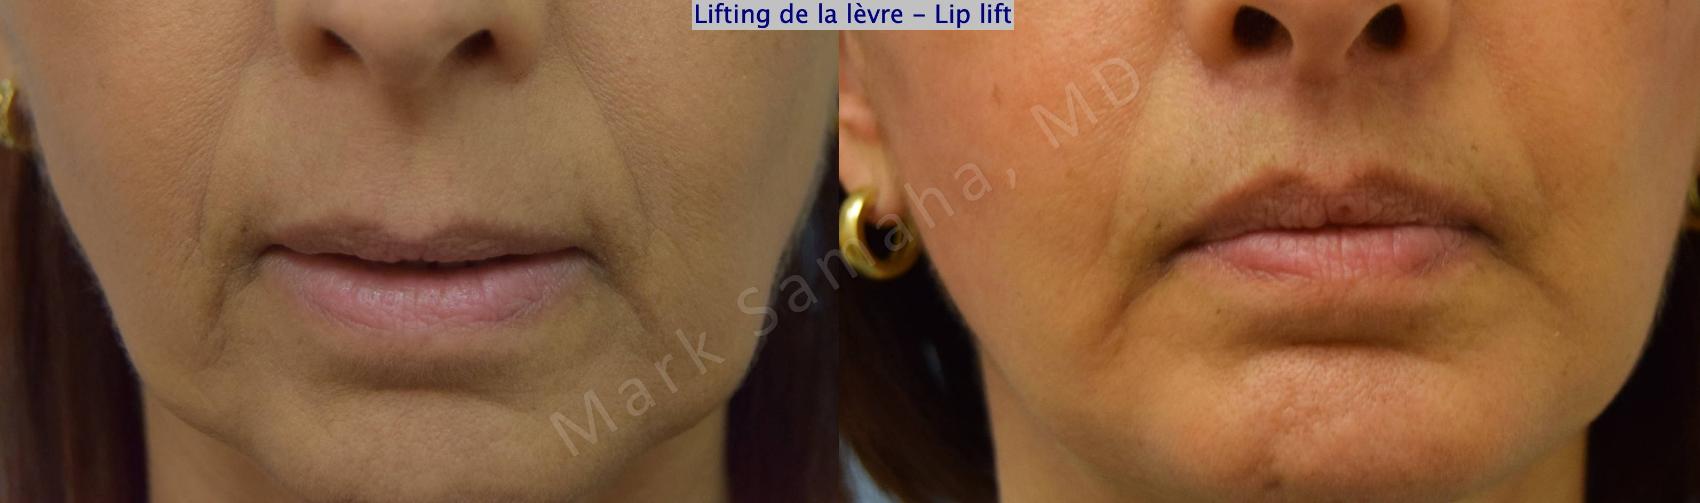 Before & After Lifting de la lèvre supérieure / Lip Lift  Case 196 Front View in Montreal, QC